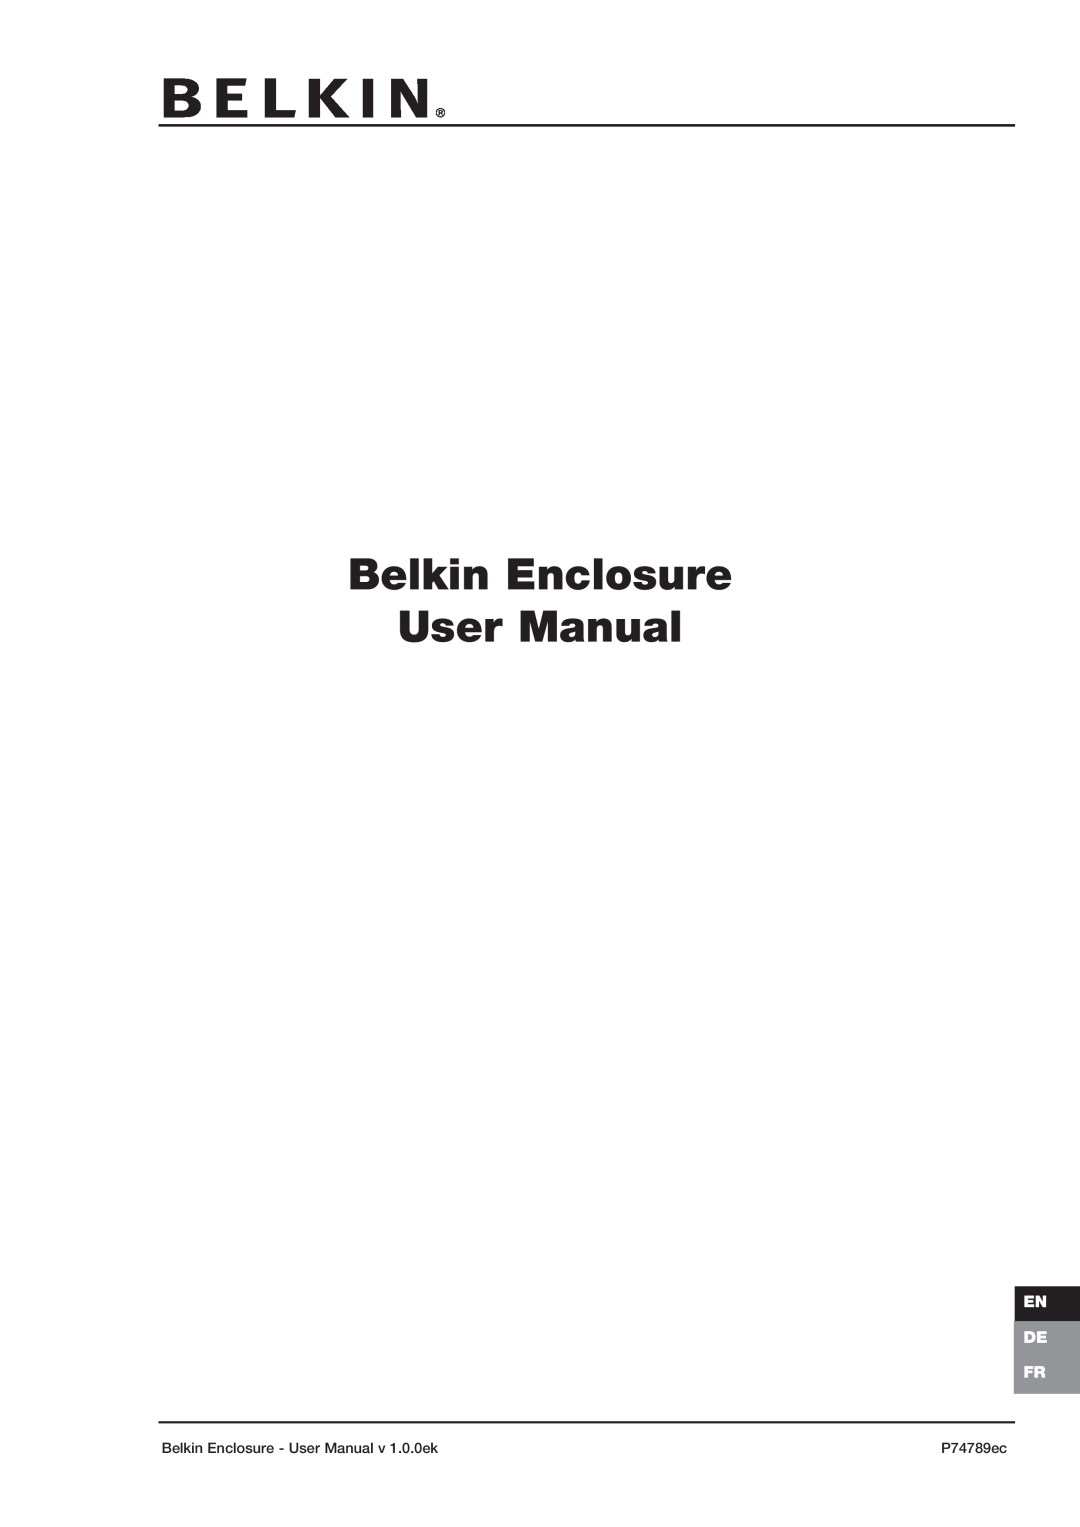 Belkin 42U user manual En De Fr, P74789ec 